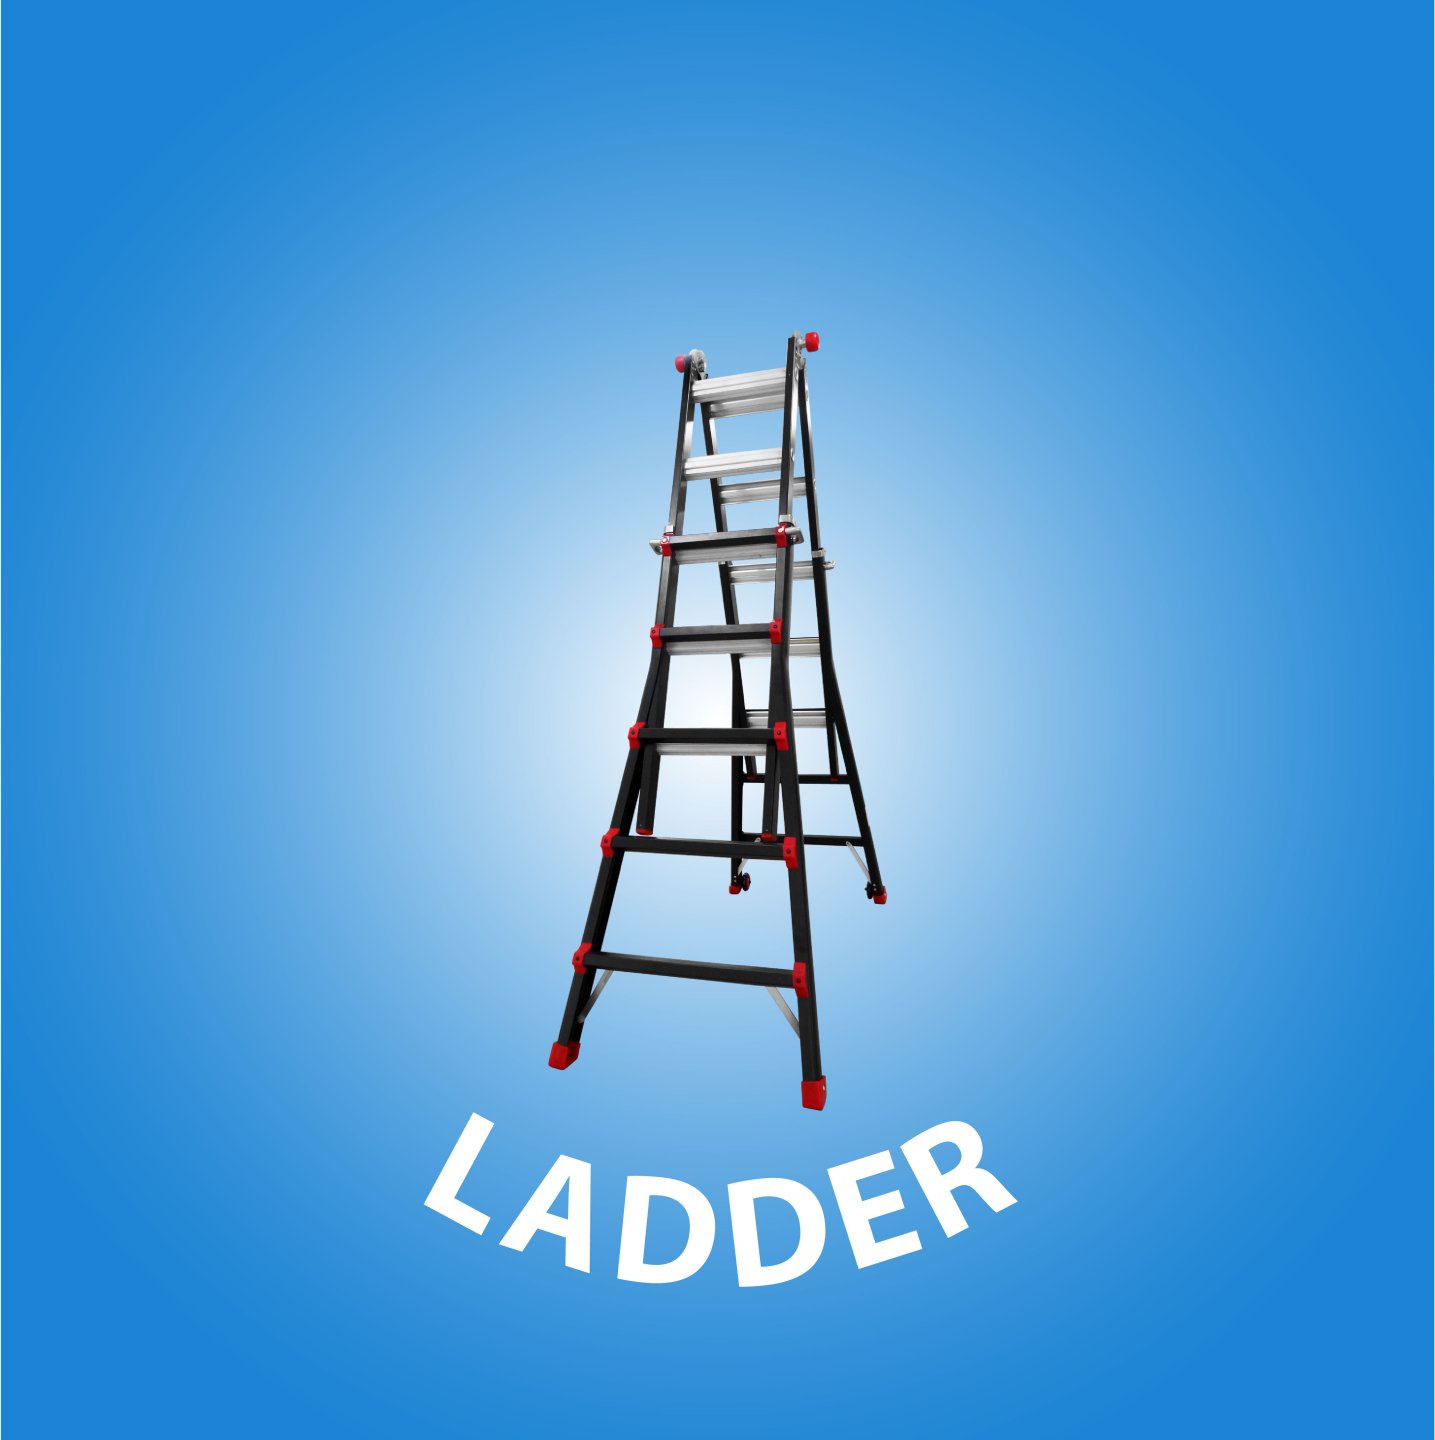  Ladder cover kategori website 27